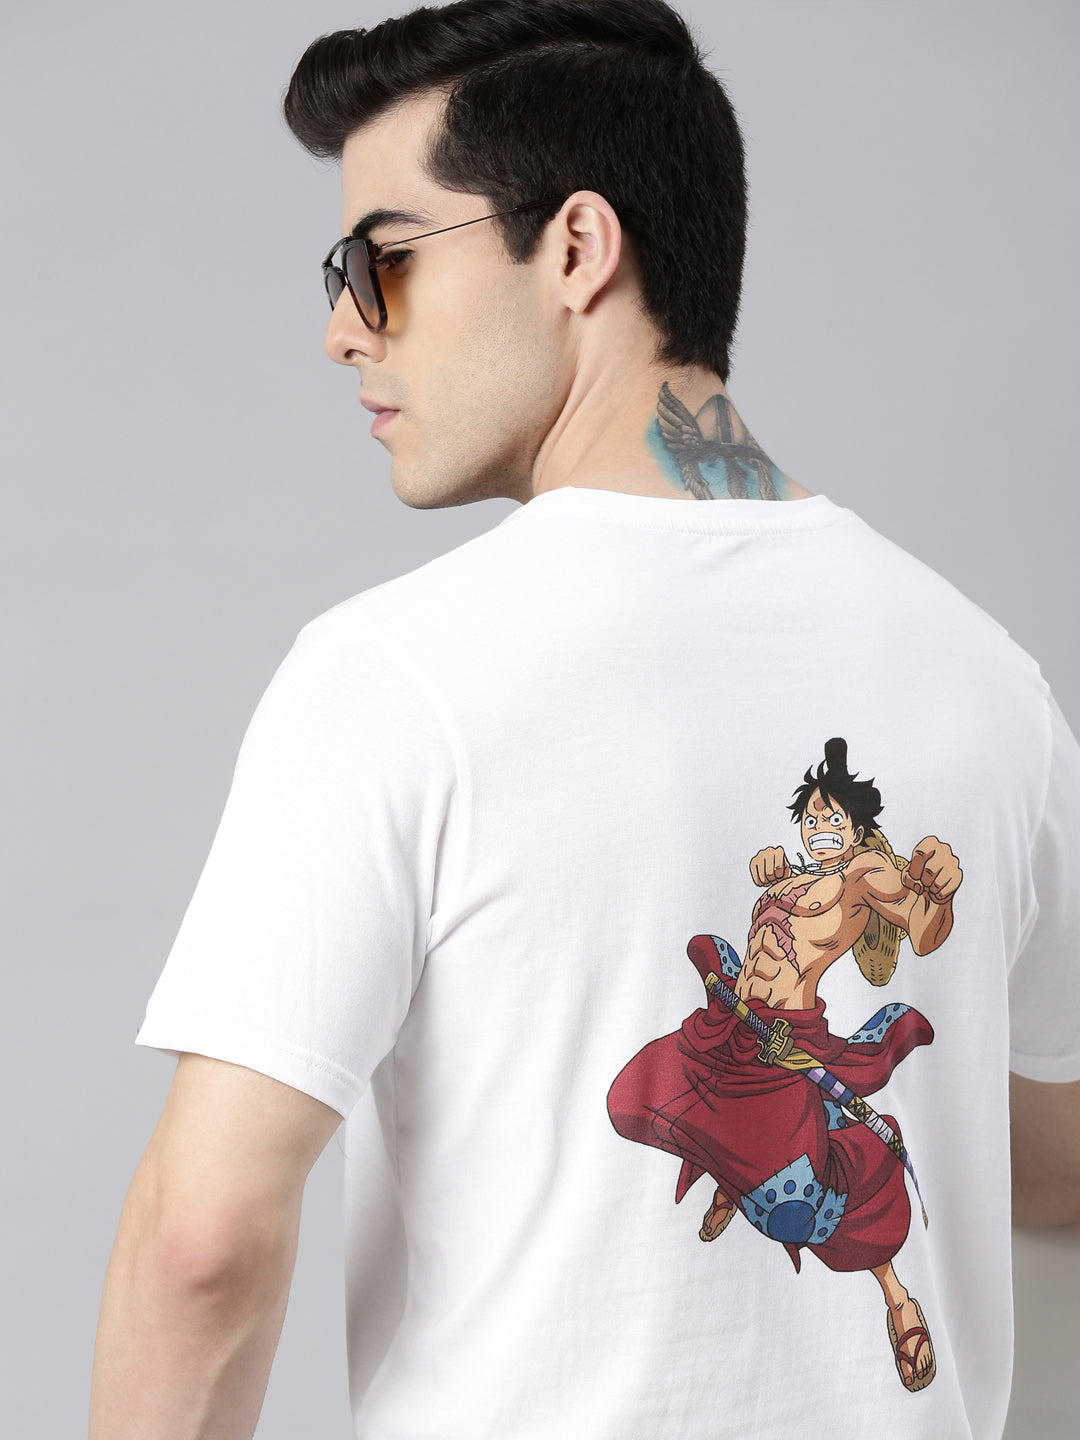 Buy UNISEX Cute Anime Tshirt Manga Lover Shirt Graphic Tee Online in India   Etsy